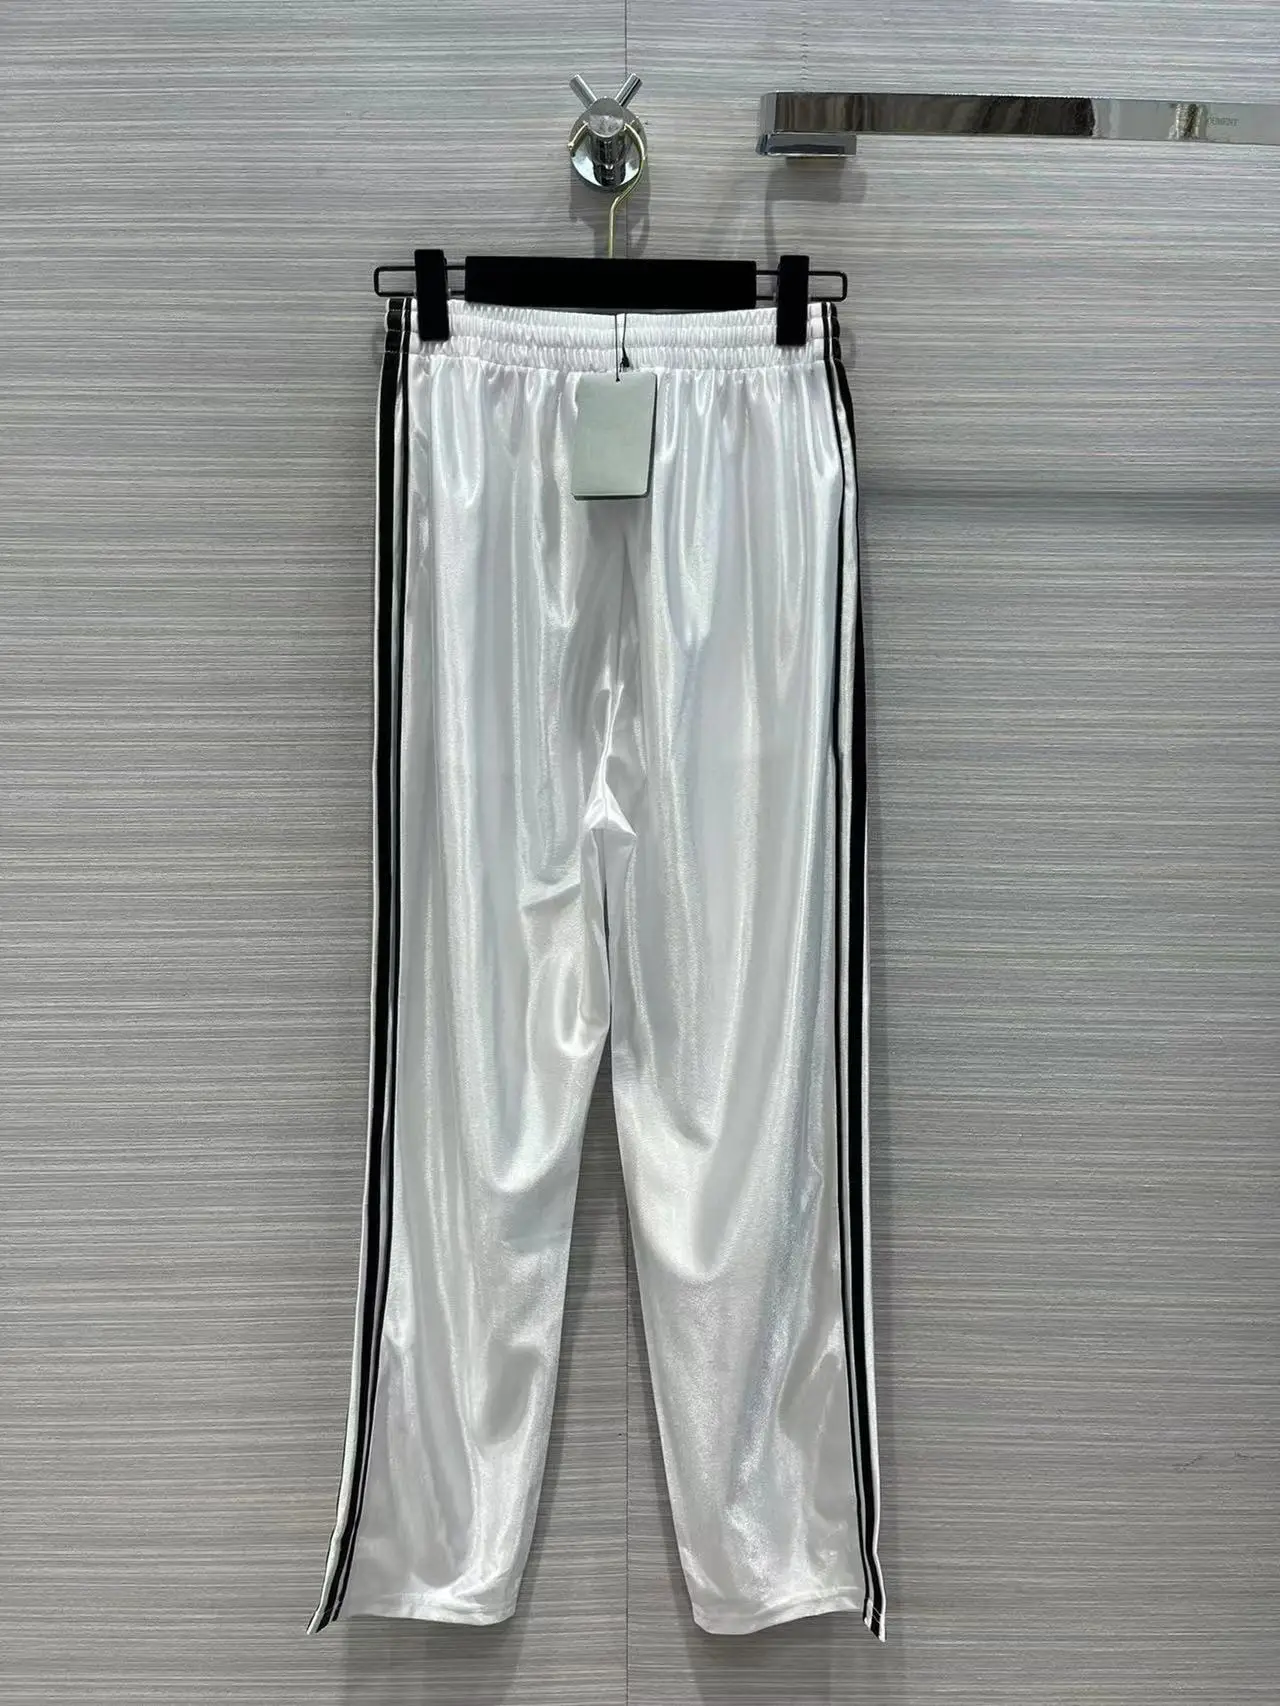 High Quality Women's Pants Casual Waist Elastic Vacation Long Fashion Runway Autumn Winter Black / White Pants 2022 New